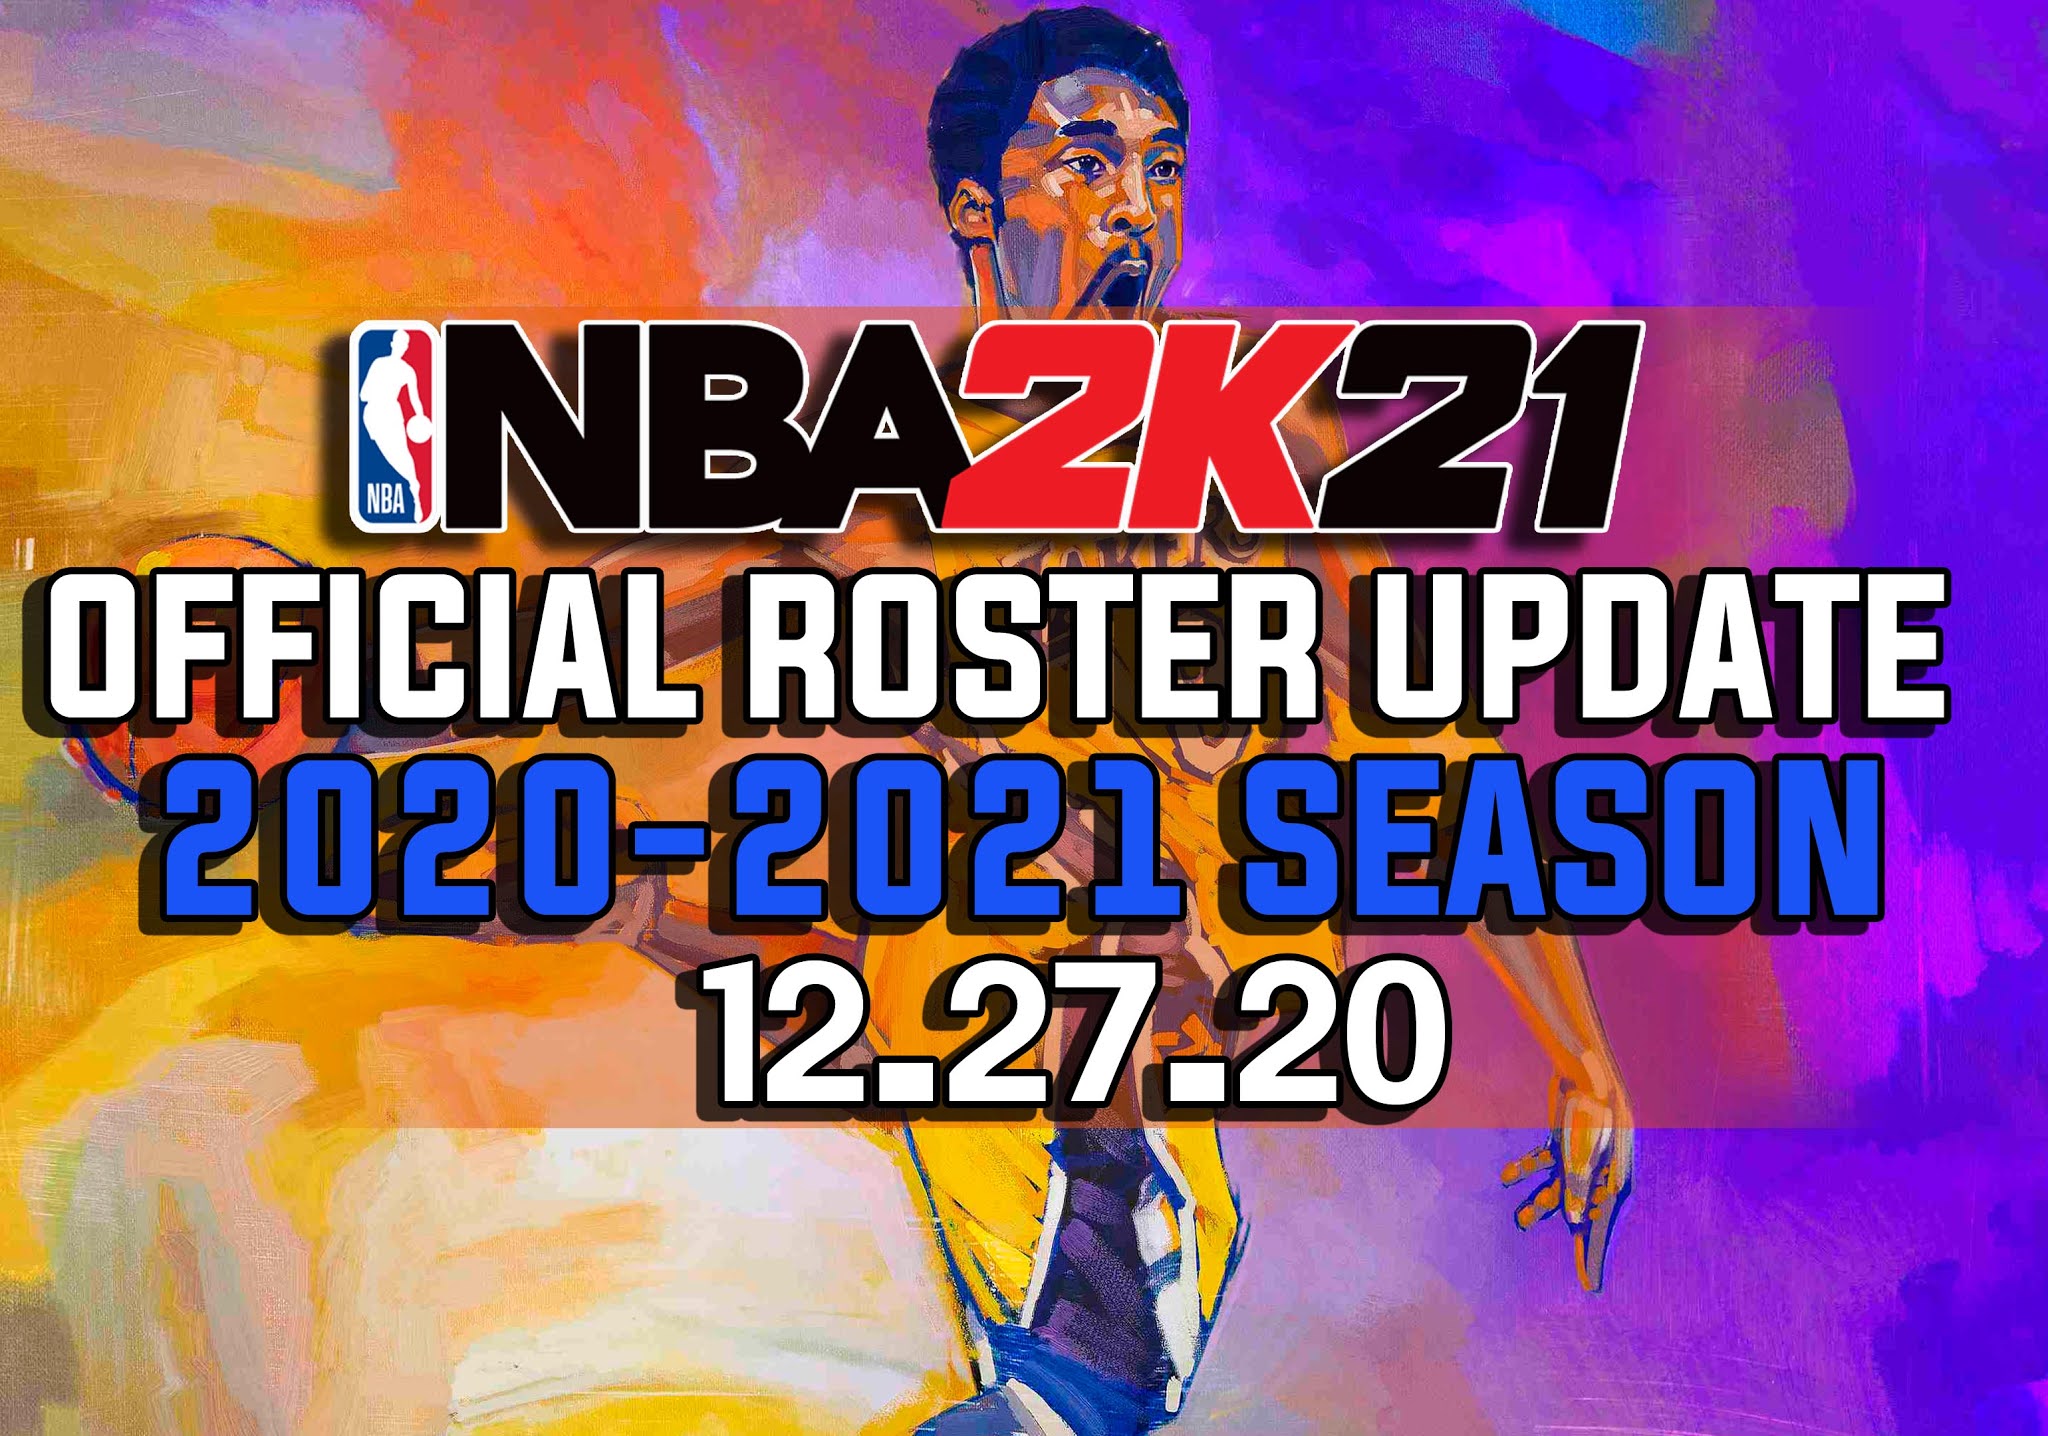 NBA 2K21 OFFICIAL ROSTER UPDATE 12.27.20 OFFICIAL SEASON START + LATEST